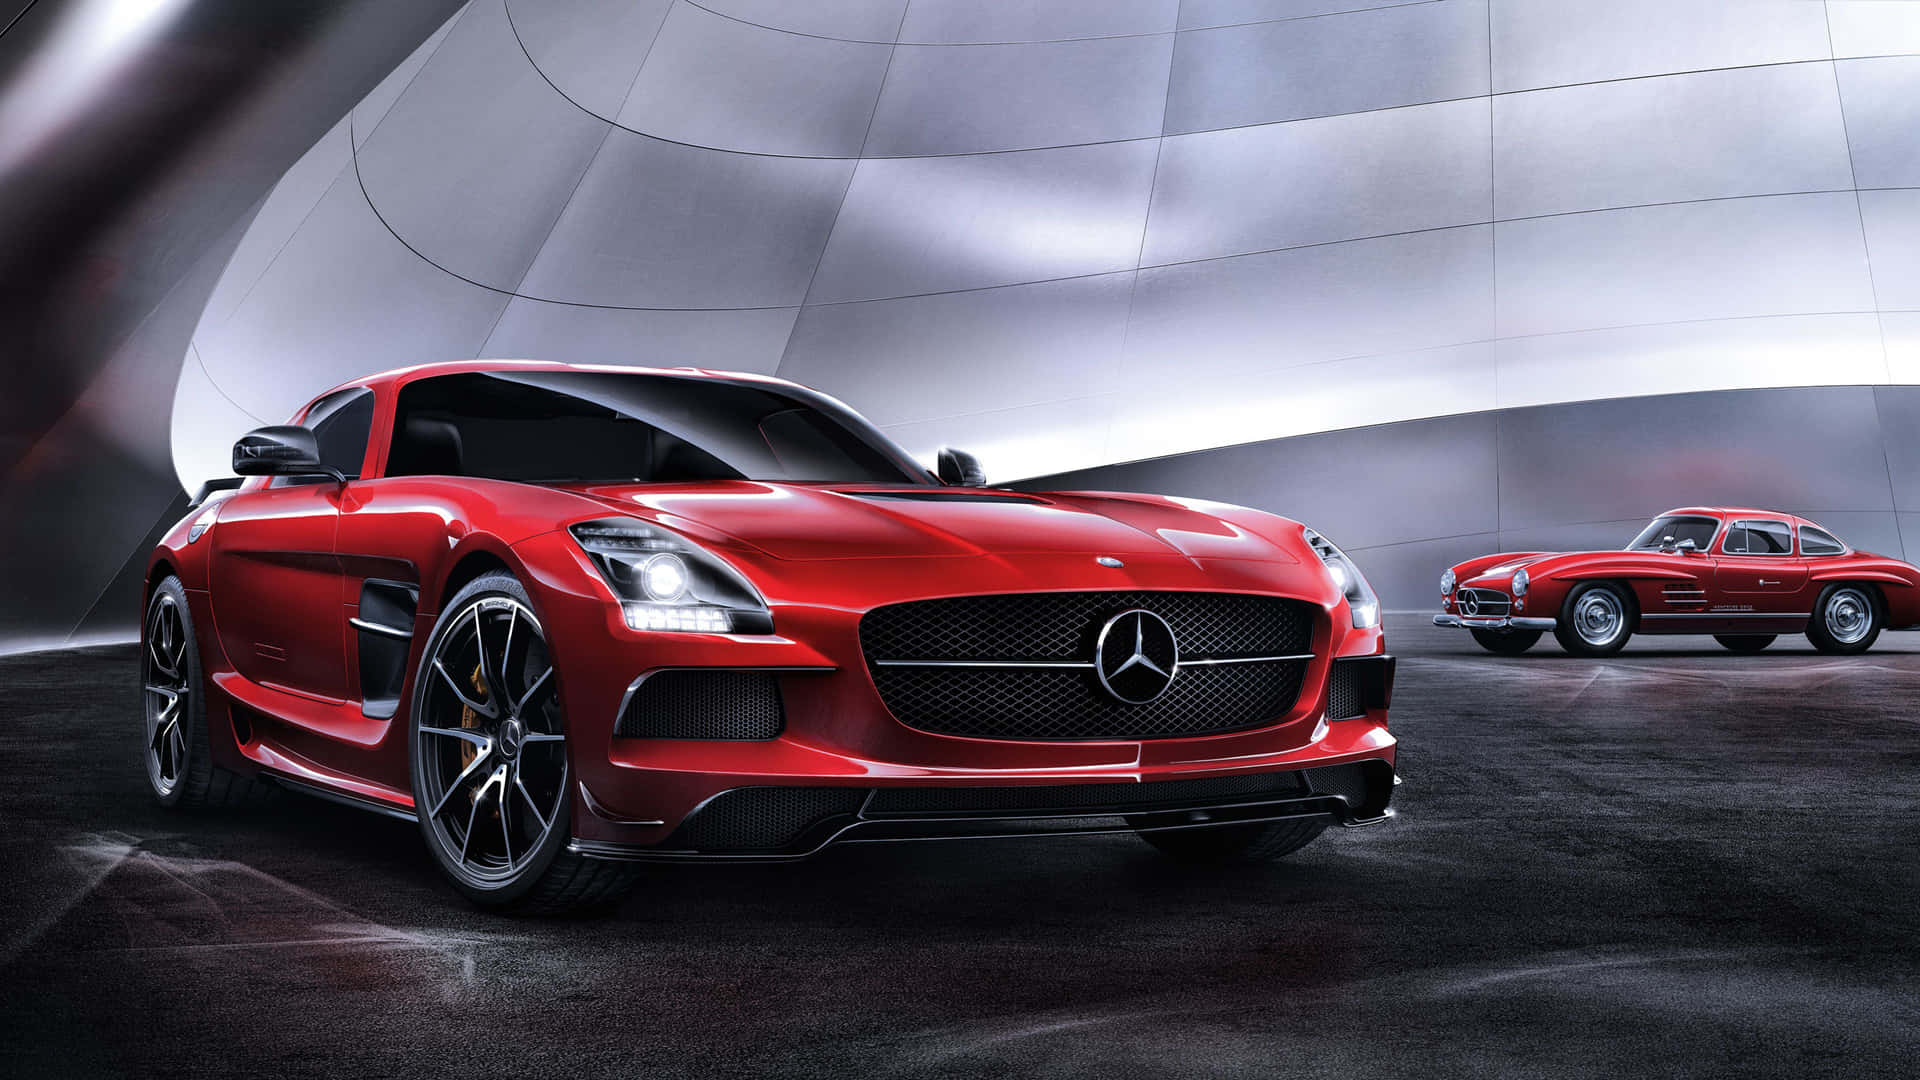 Stunning 4K Mercedes Background Featuring a Sleek and Modern Mercedes Vehicle